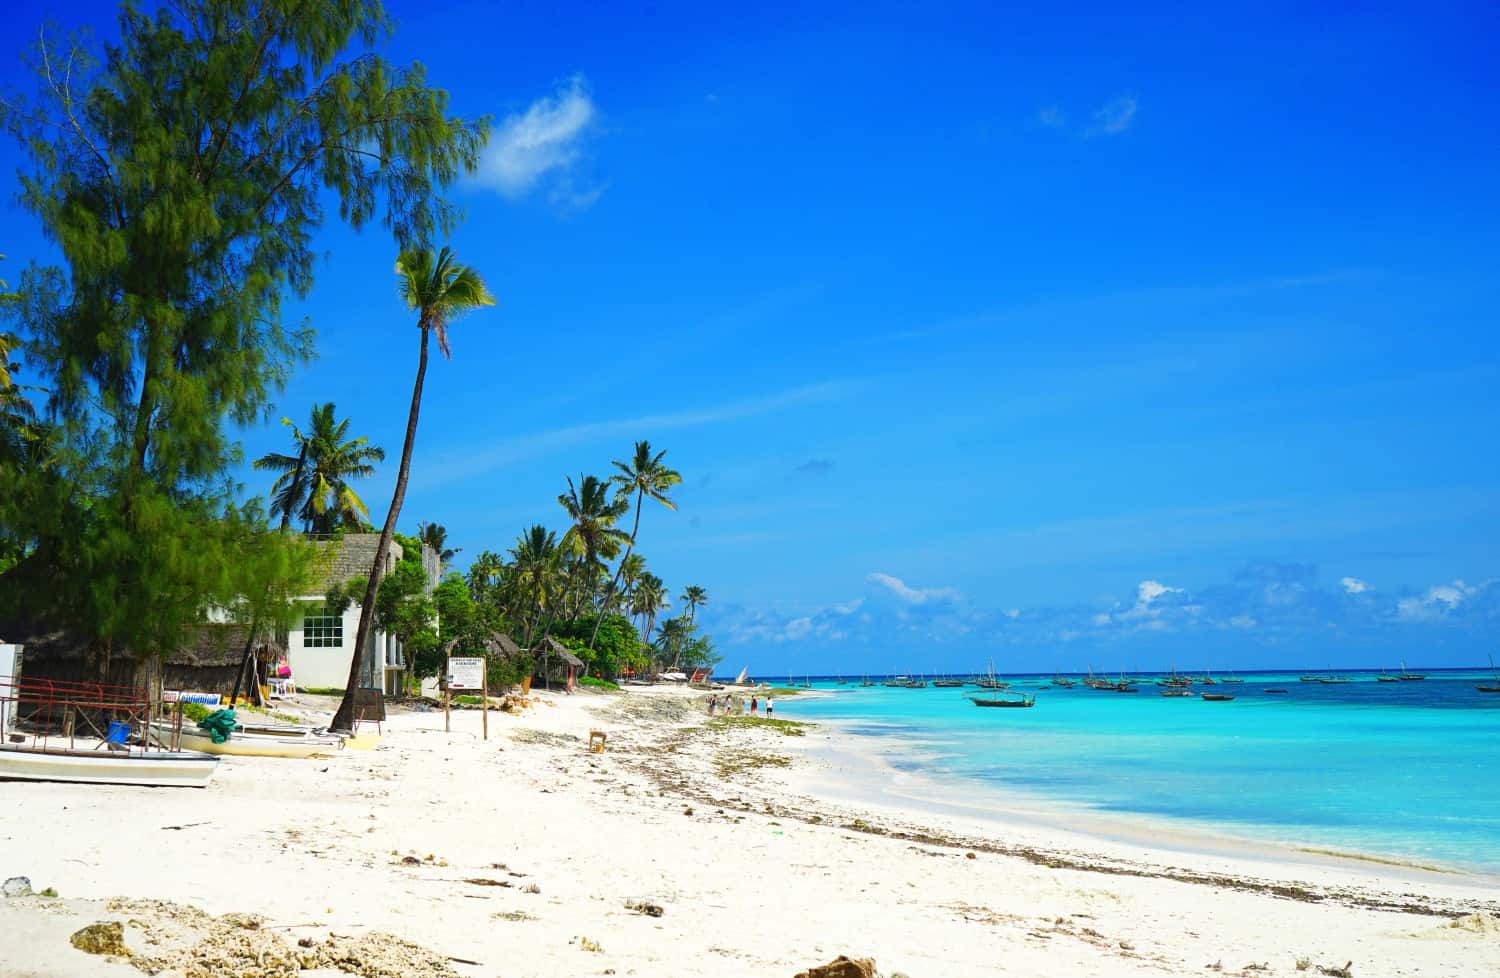 Soak up the romance of Zanzibar on the beach